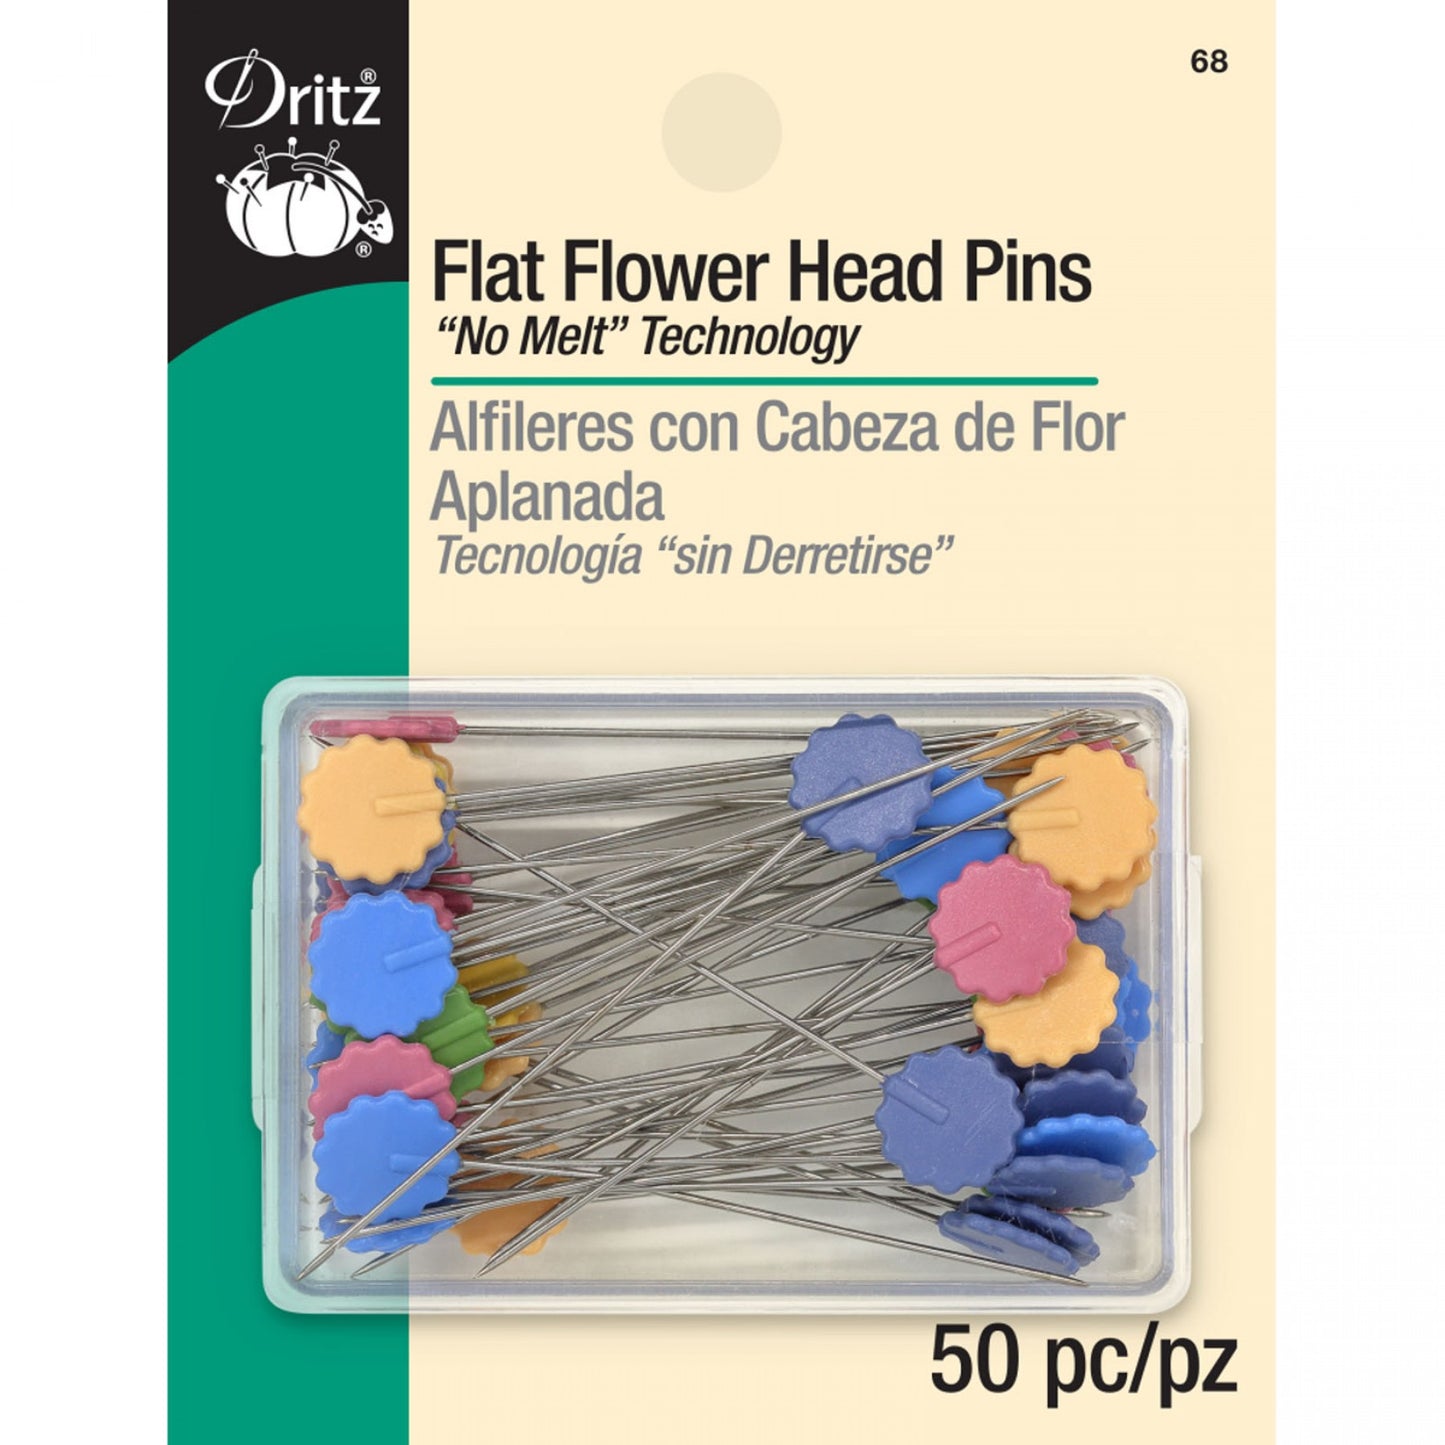 Flat Flower Head Pins